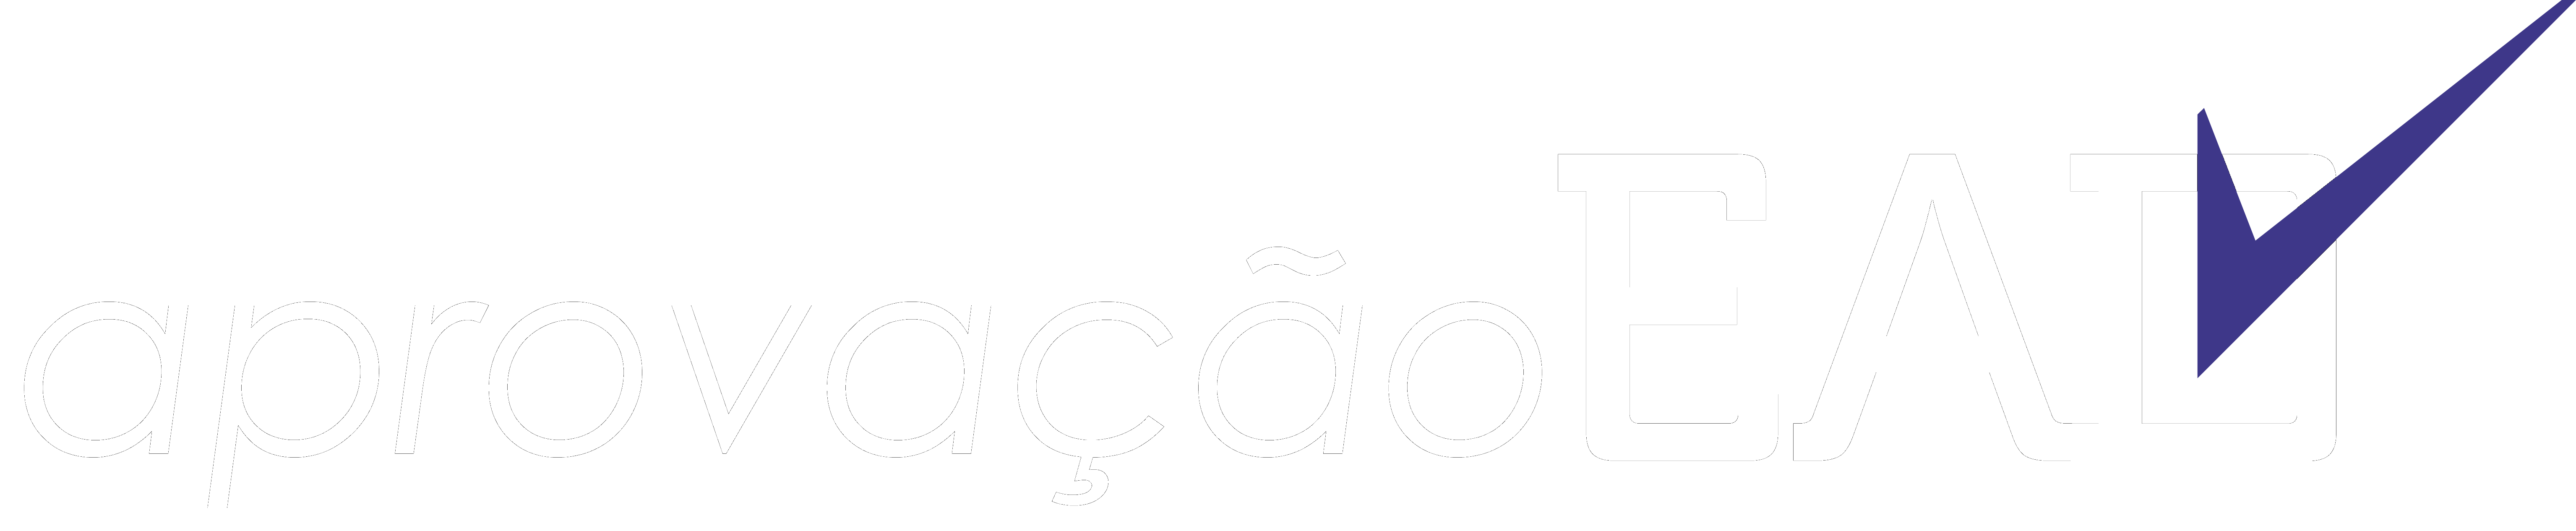 logotipo_aprovacao